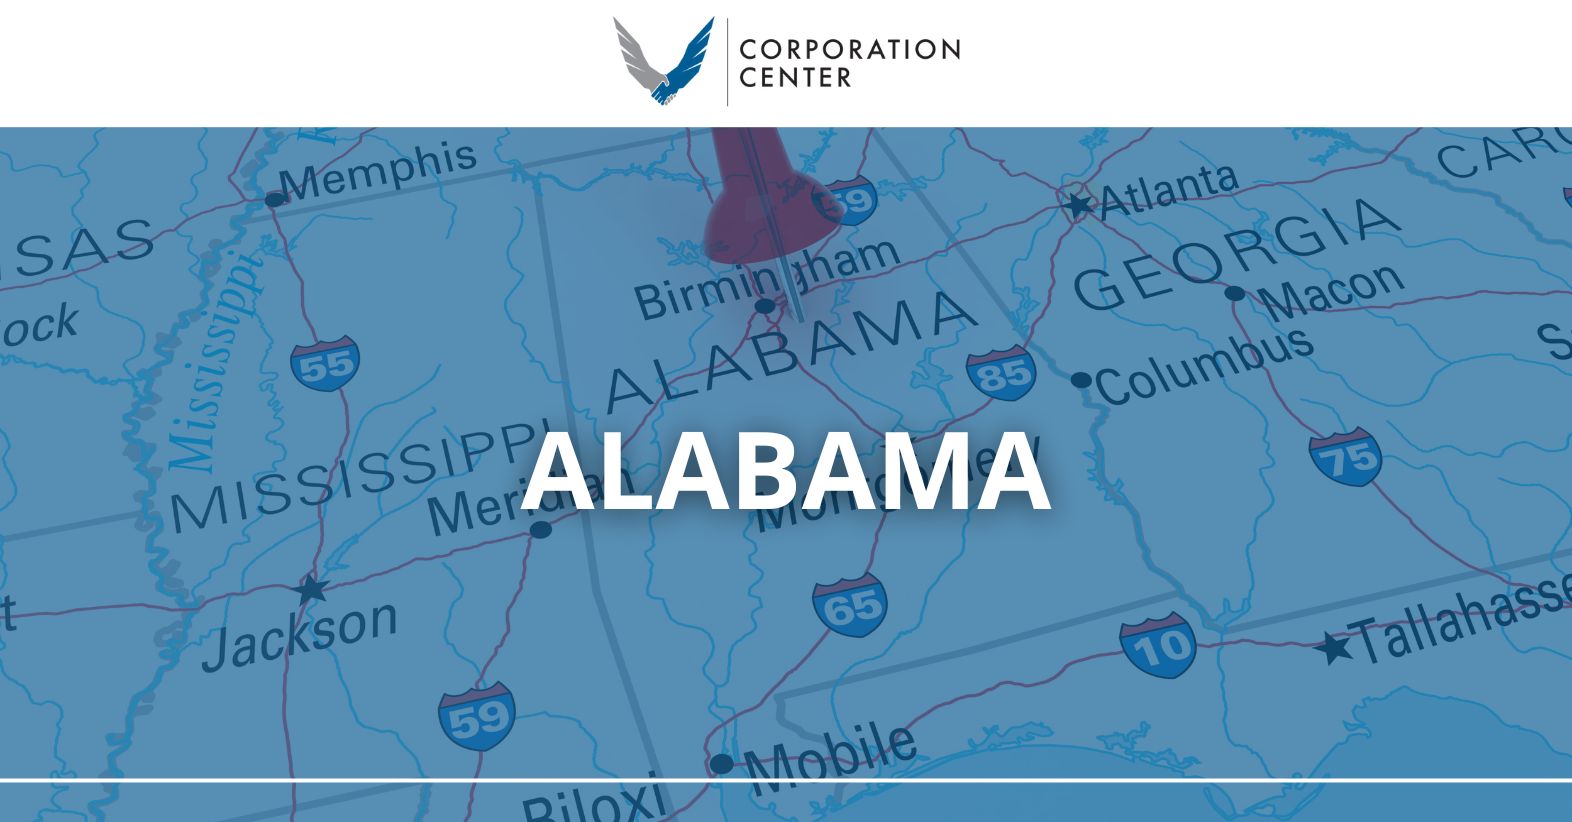 Form a Corporation in Alabama